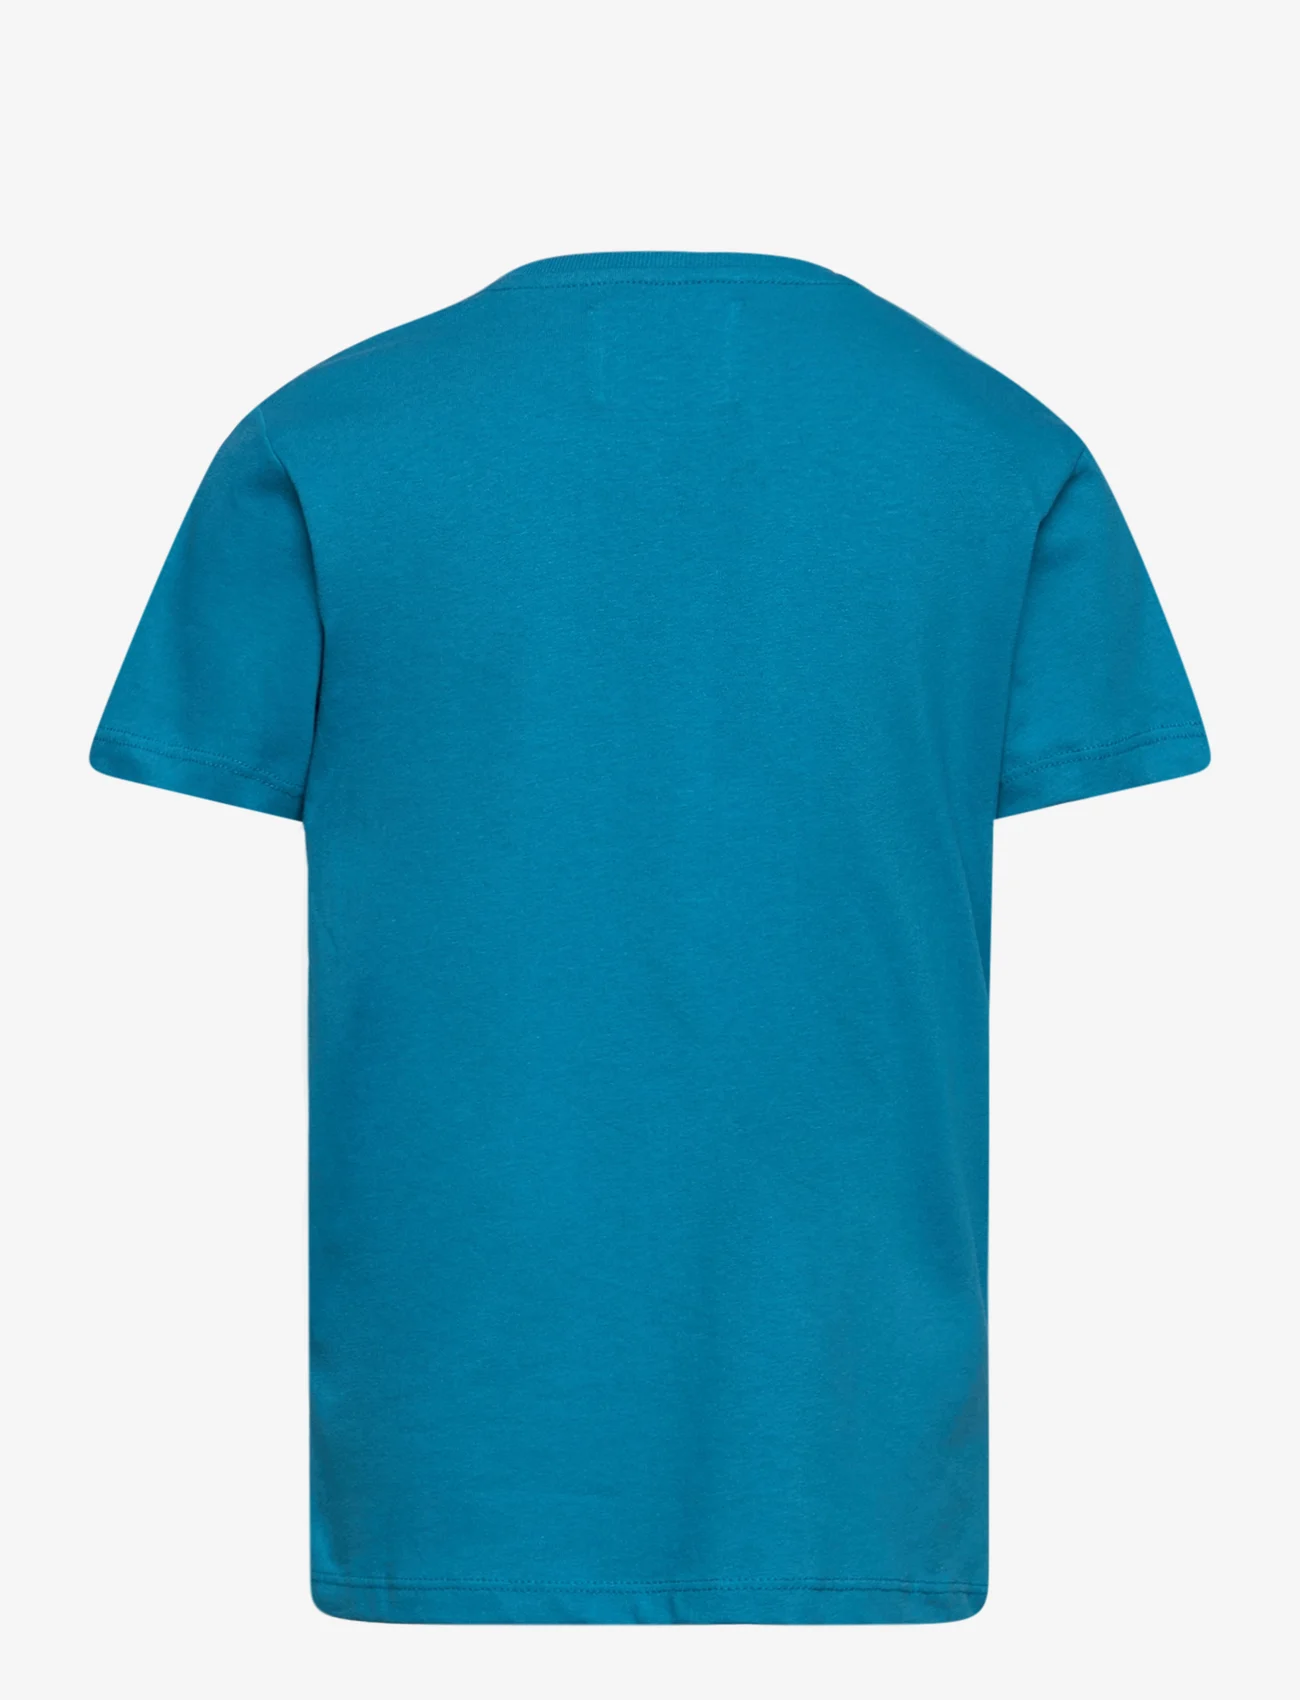 Wood Wood - Ola kids print T-shirt - short-sleeved - blue - 1